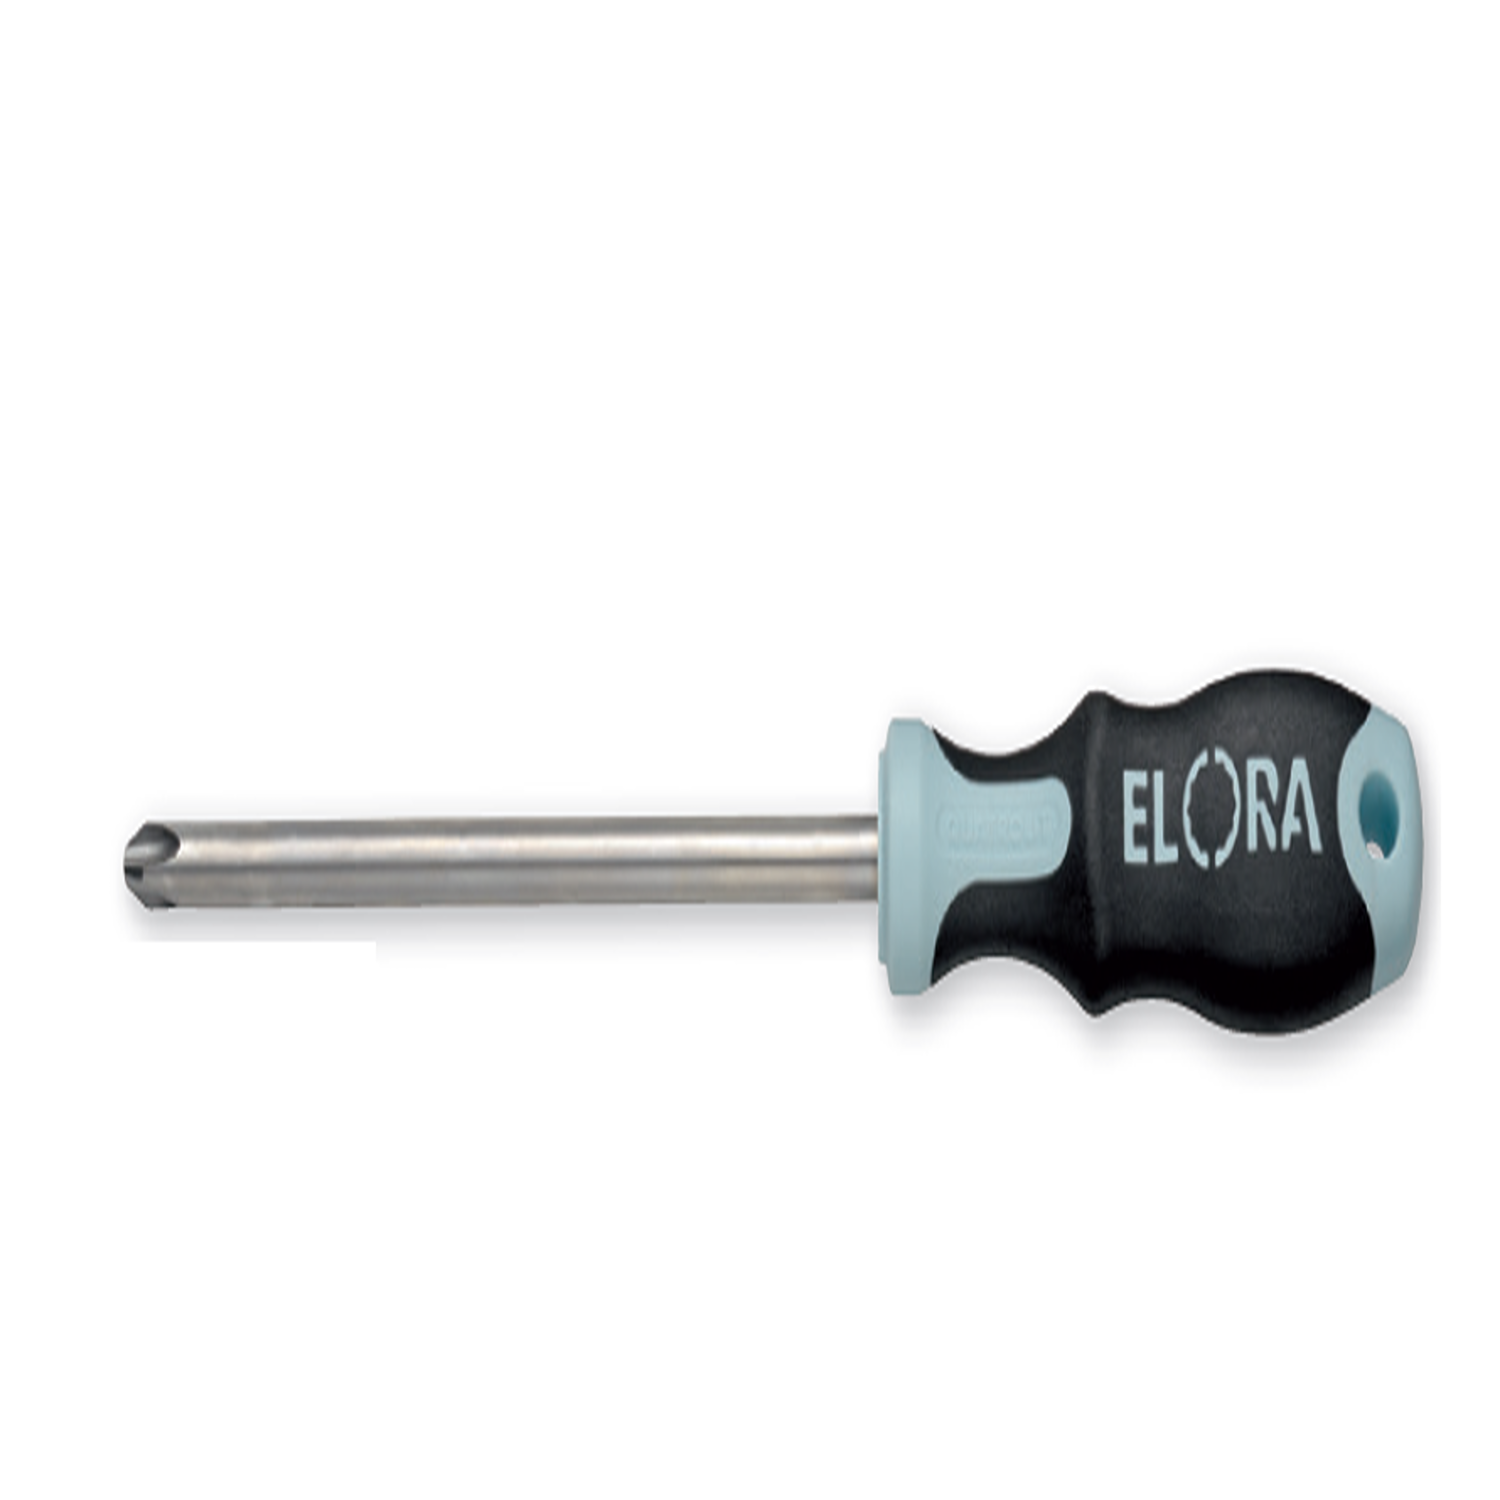 ELORA 547-ST PH Screwdriver Stainless (ELORA Tools) - Premium Screwdriver from ELORA - Shop now at Yew Aik.